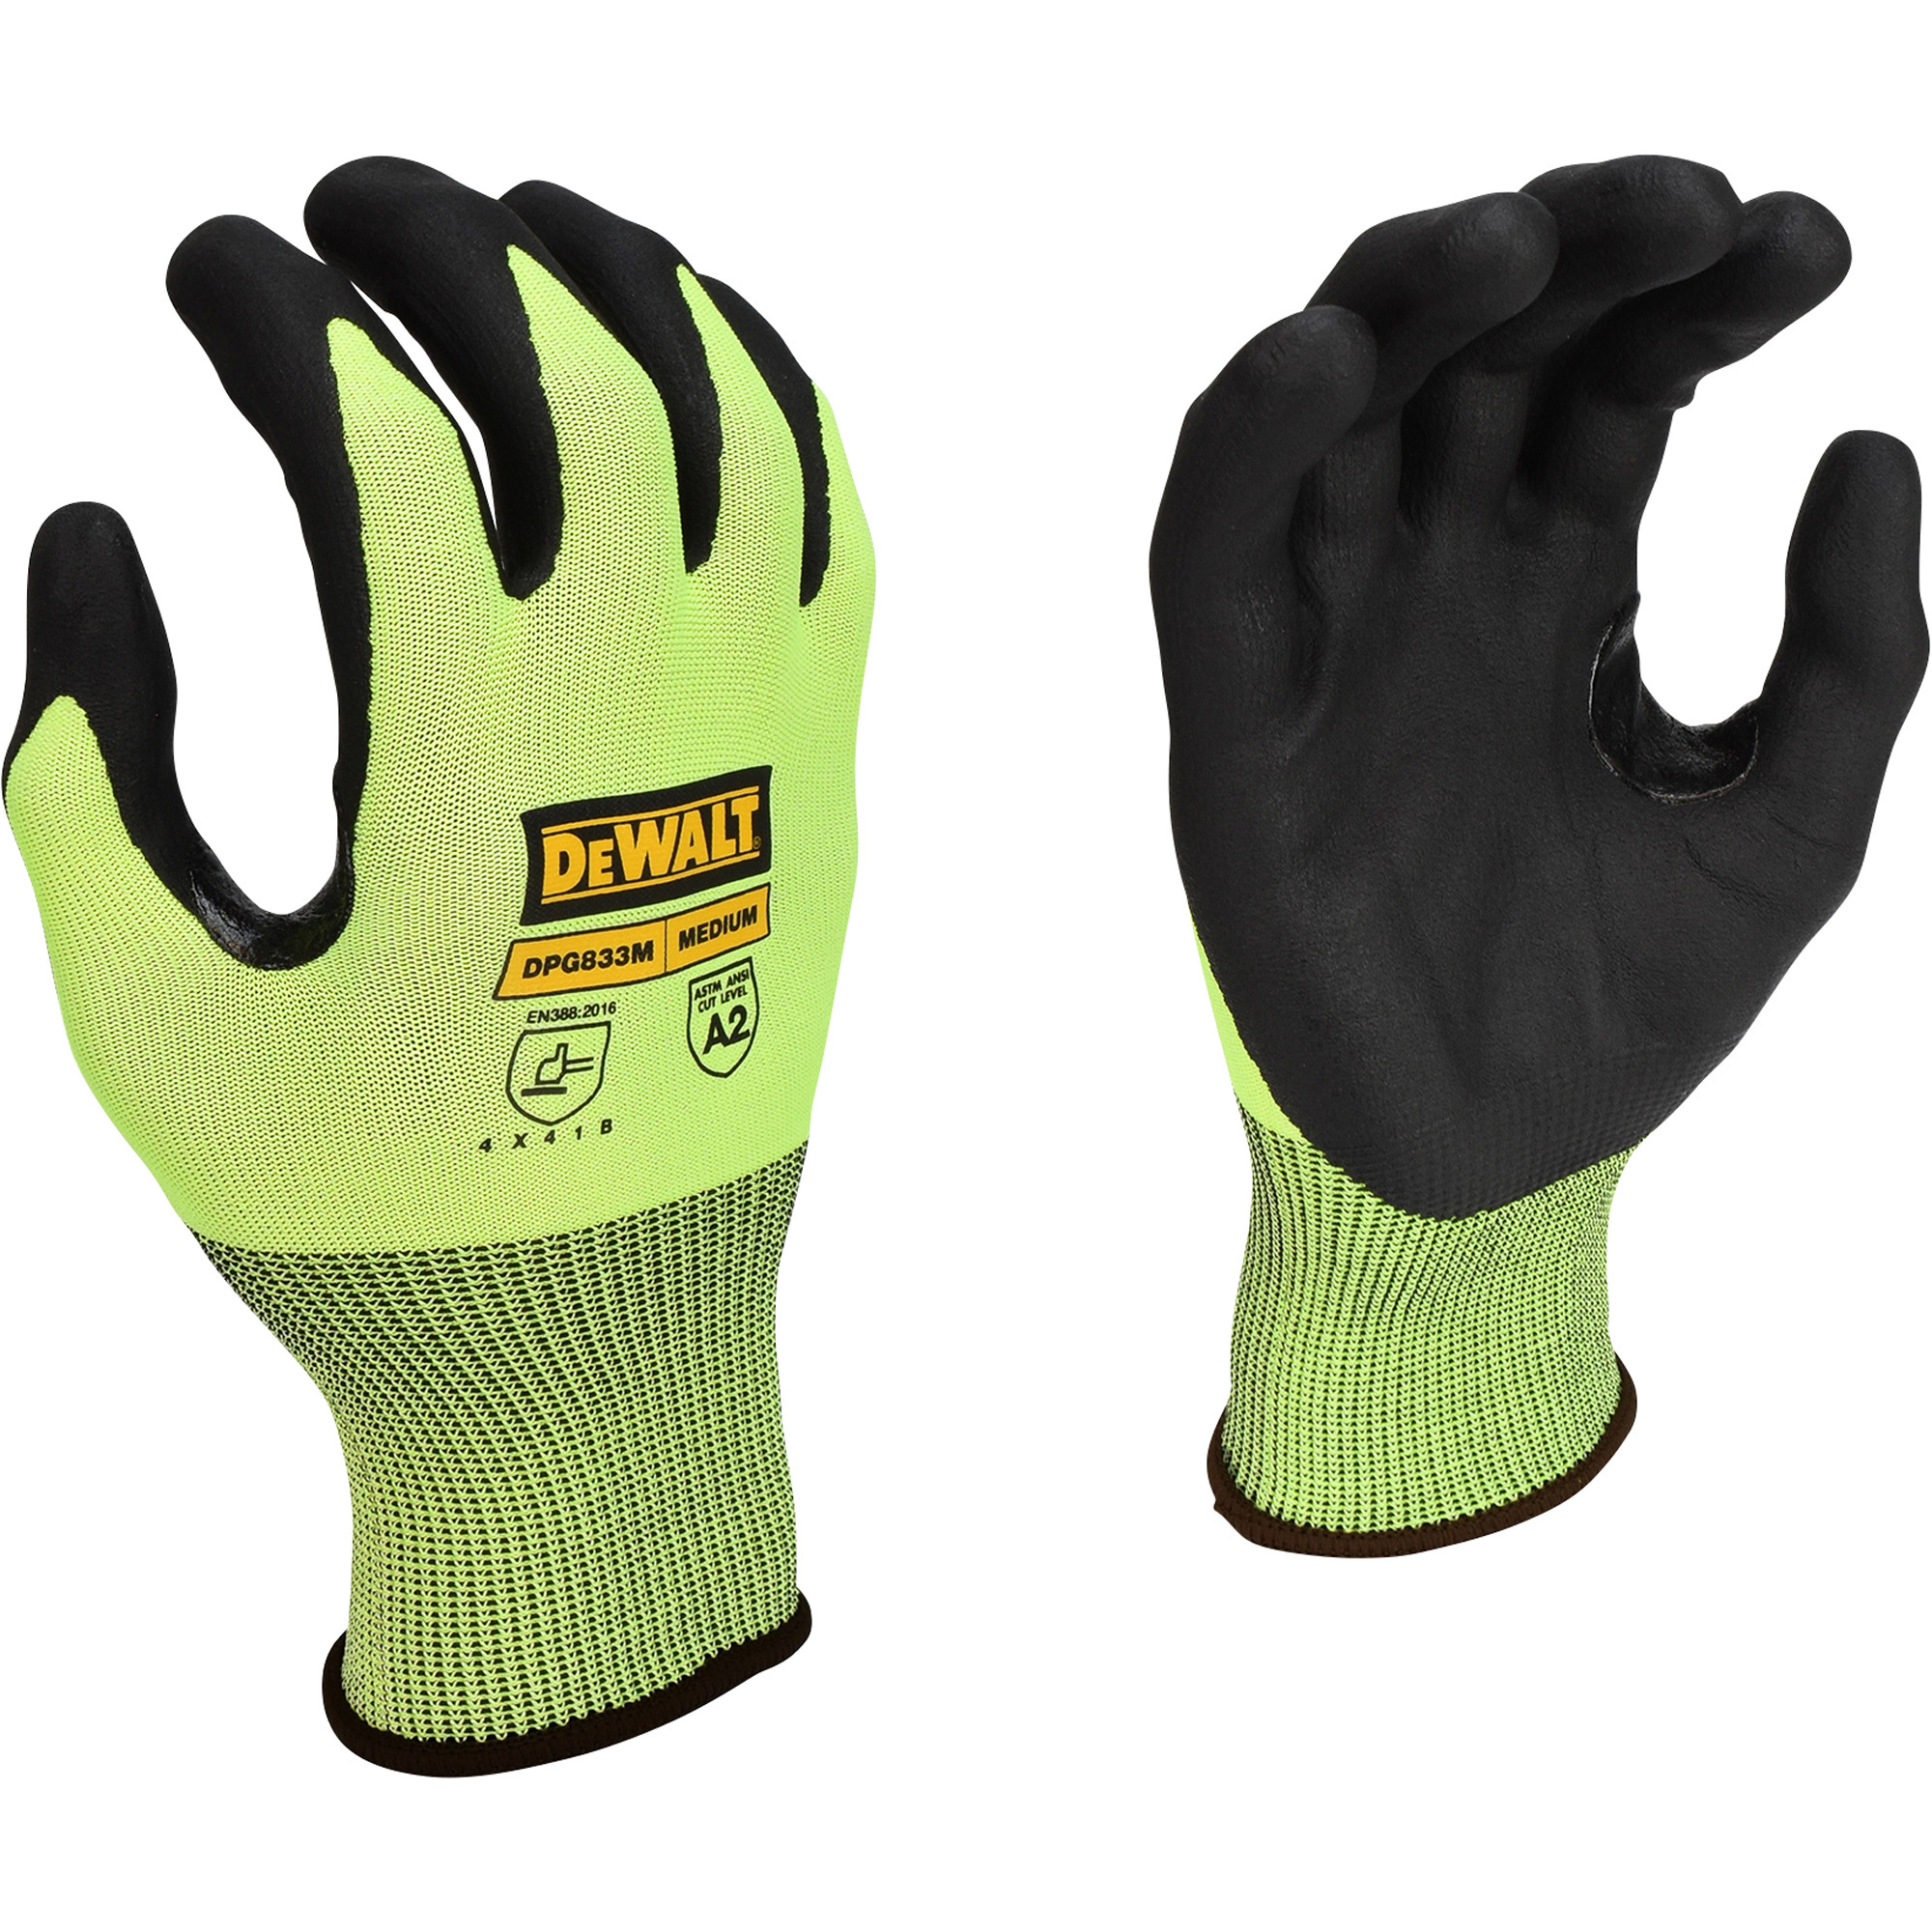 DEWALT 18-Gauge HPPE Cut-Resistant Level A2 Gloves â Hi-Vis Green/Black, Medium, Model DPG833TM